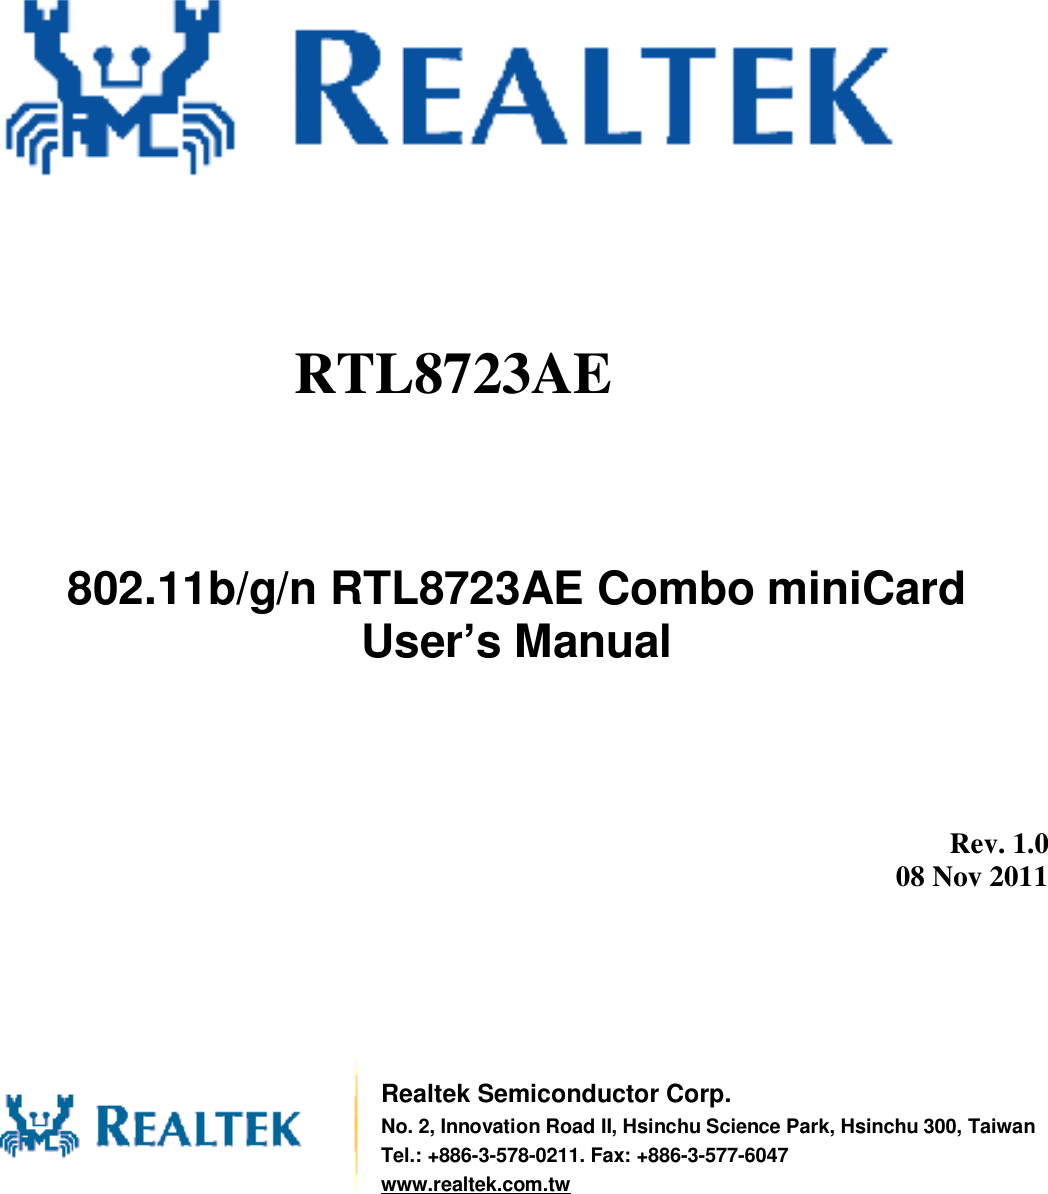                802.11b/g/n RTL8723AE Combo miniCard User’s Manual          Rev. 1.0 08 Nov 2011        Realtek Semiconductor Corp. No. 2, Innovation Road II, Hsinchu Science Park, Hsinchu 300, Taiwan Tel.: +886-3-578-0211. Fax: +886-3-577-6047 www.realtek.com.tw RTL8723AE  